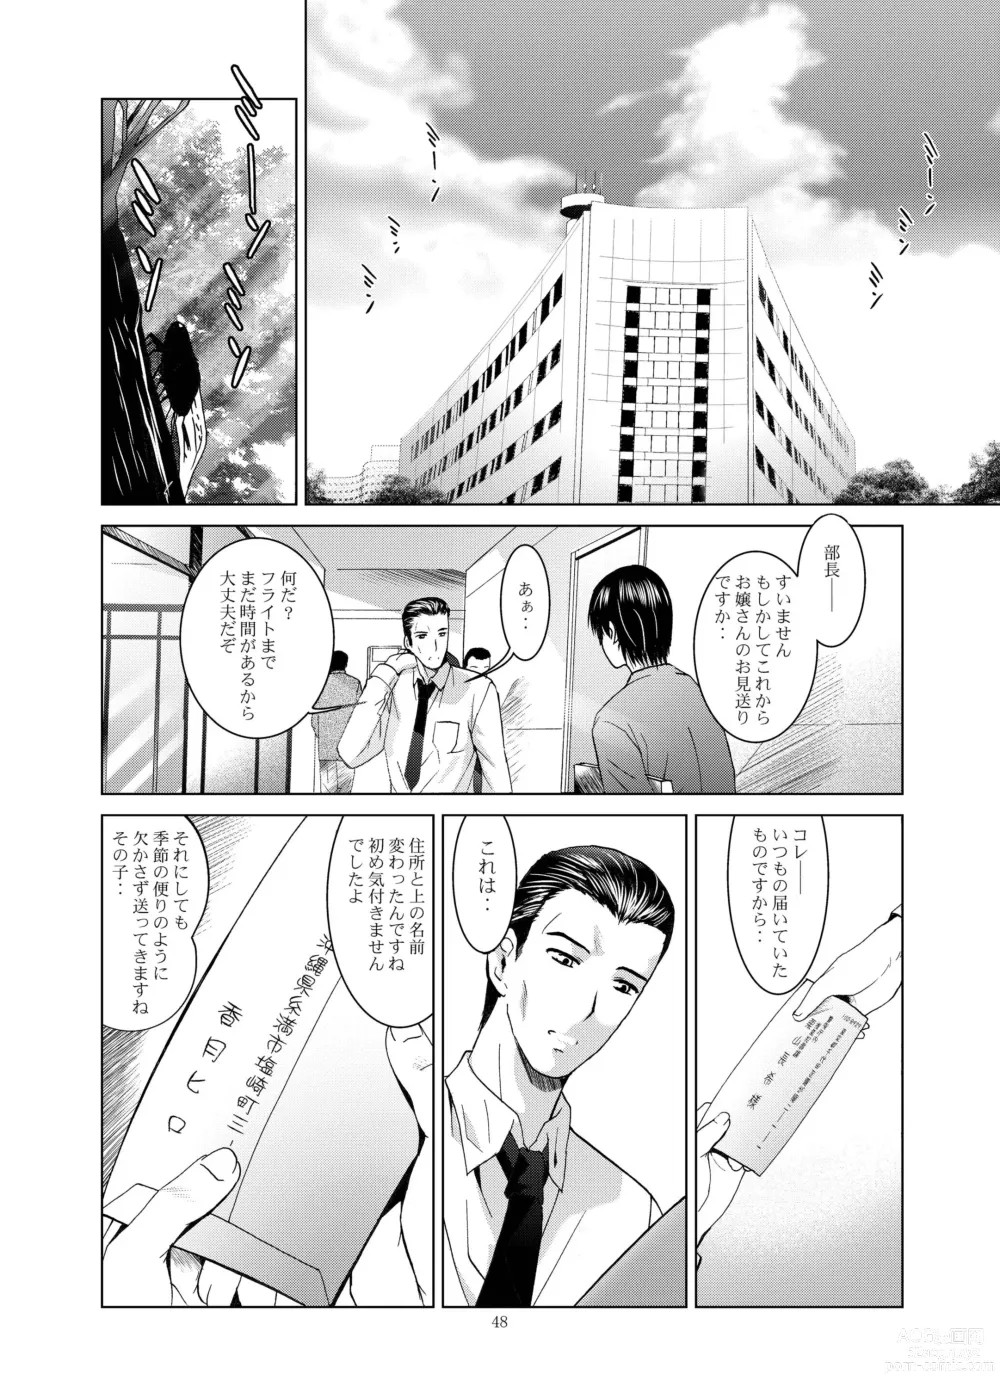 Page 48 of doujinshi Mousou Mini Theater 28